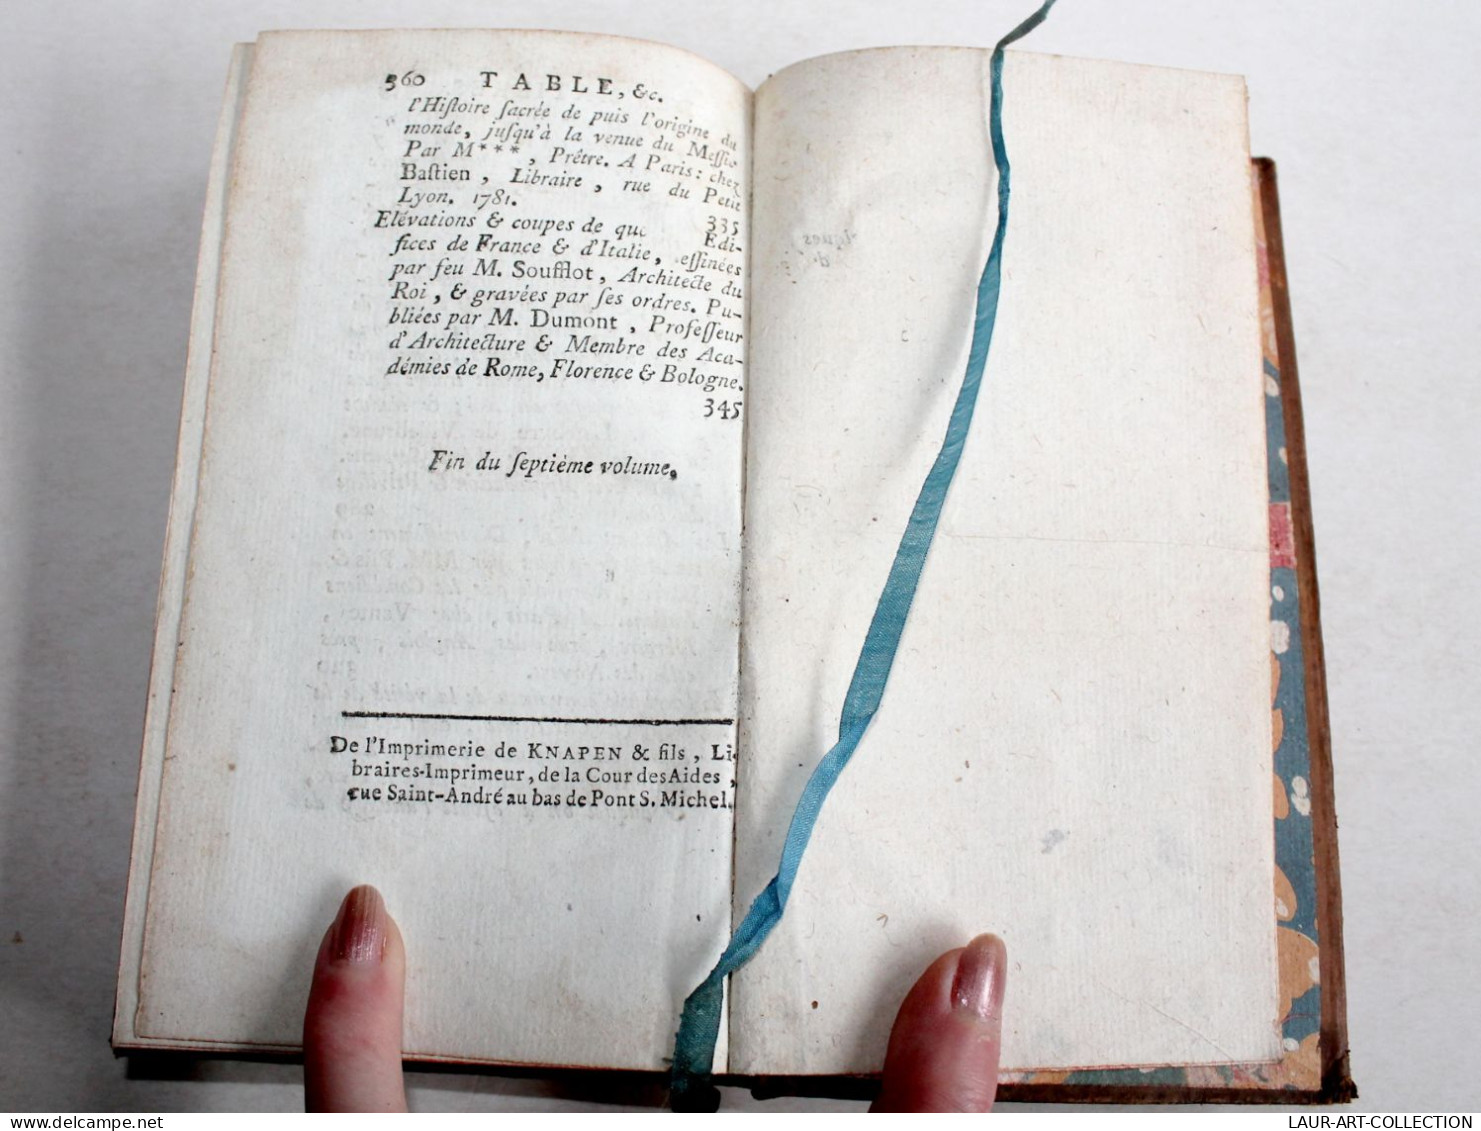 L'ANNEE LITTERAIRE 1781 par FRERON, TOME VII CHEZ MERIGOT LIBRAIRE LIVRE XVIIIe / LIVRE ANCIEN XVIIIe SIECLE (2204.248)